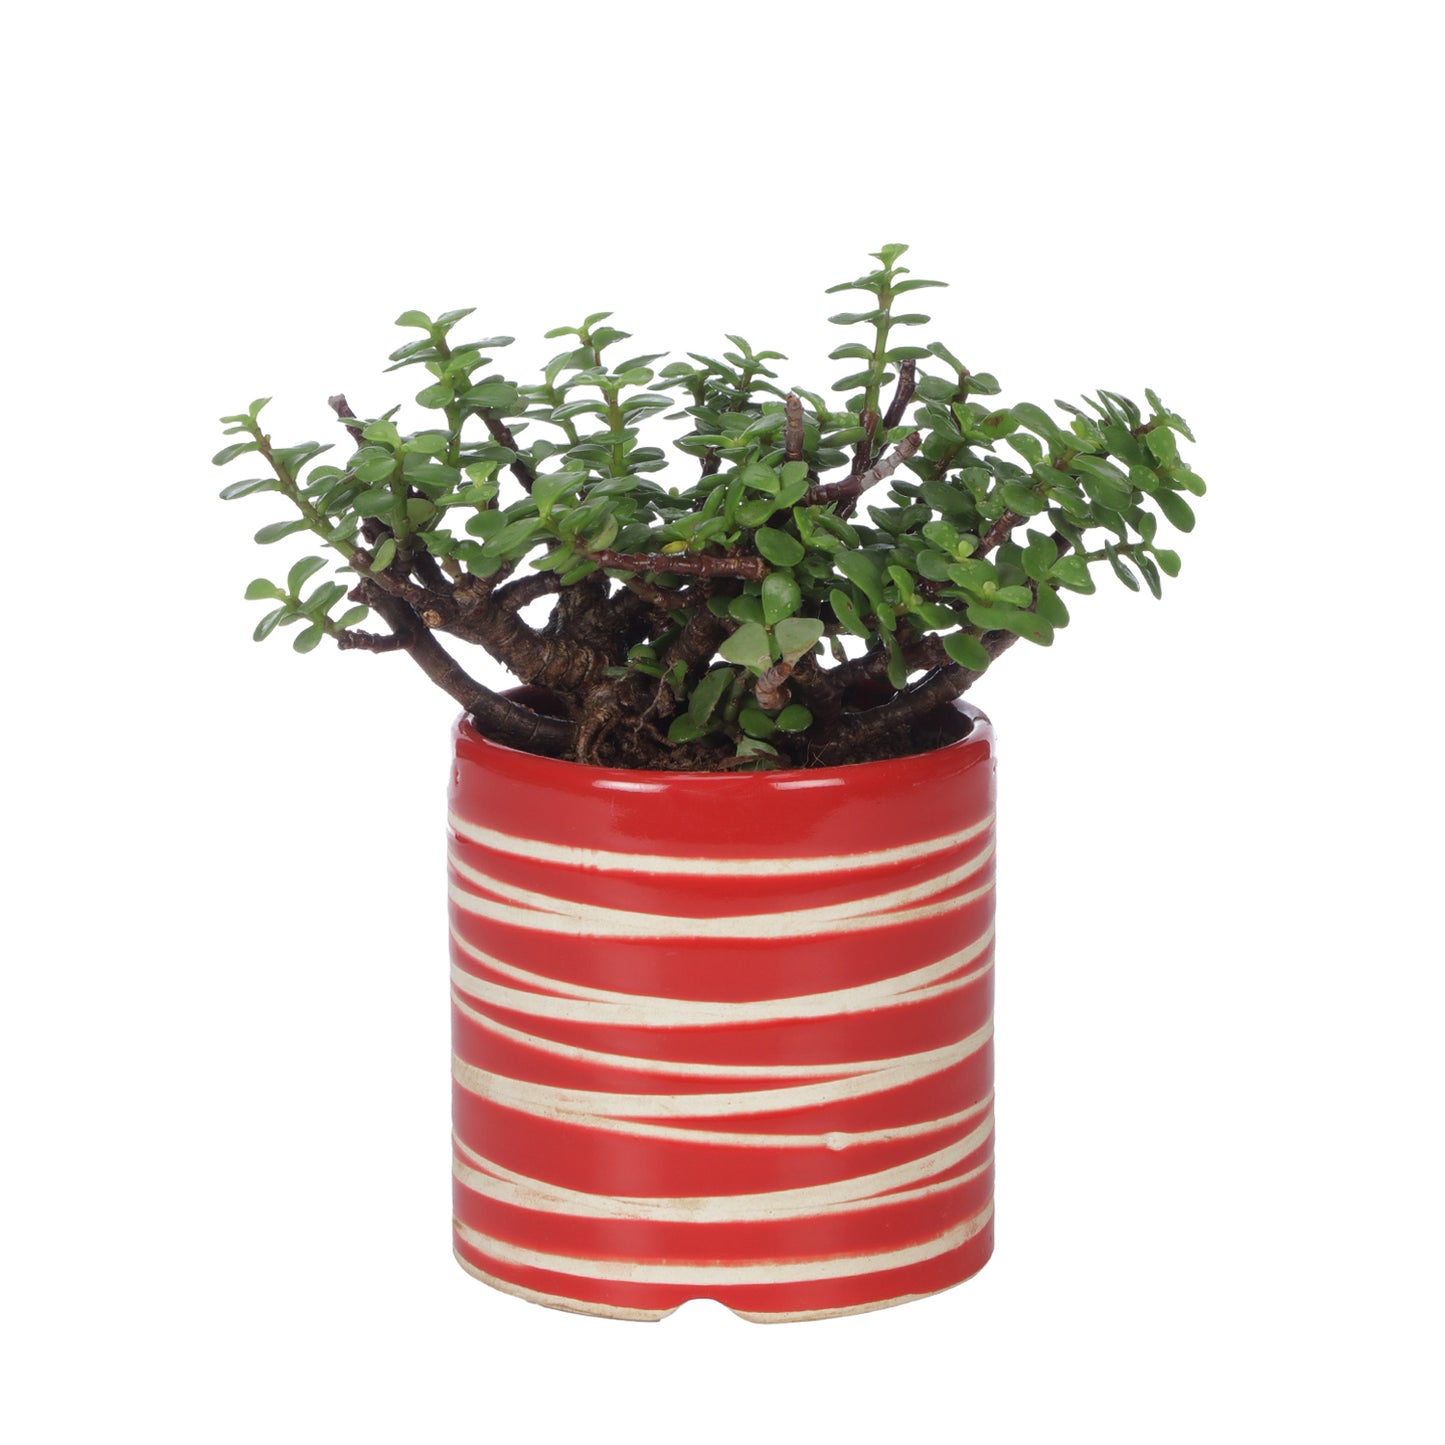 Good Luck Jade Plant with Studio Red Colour Ceramic Pot for Home Decor (Live Plant)